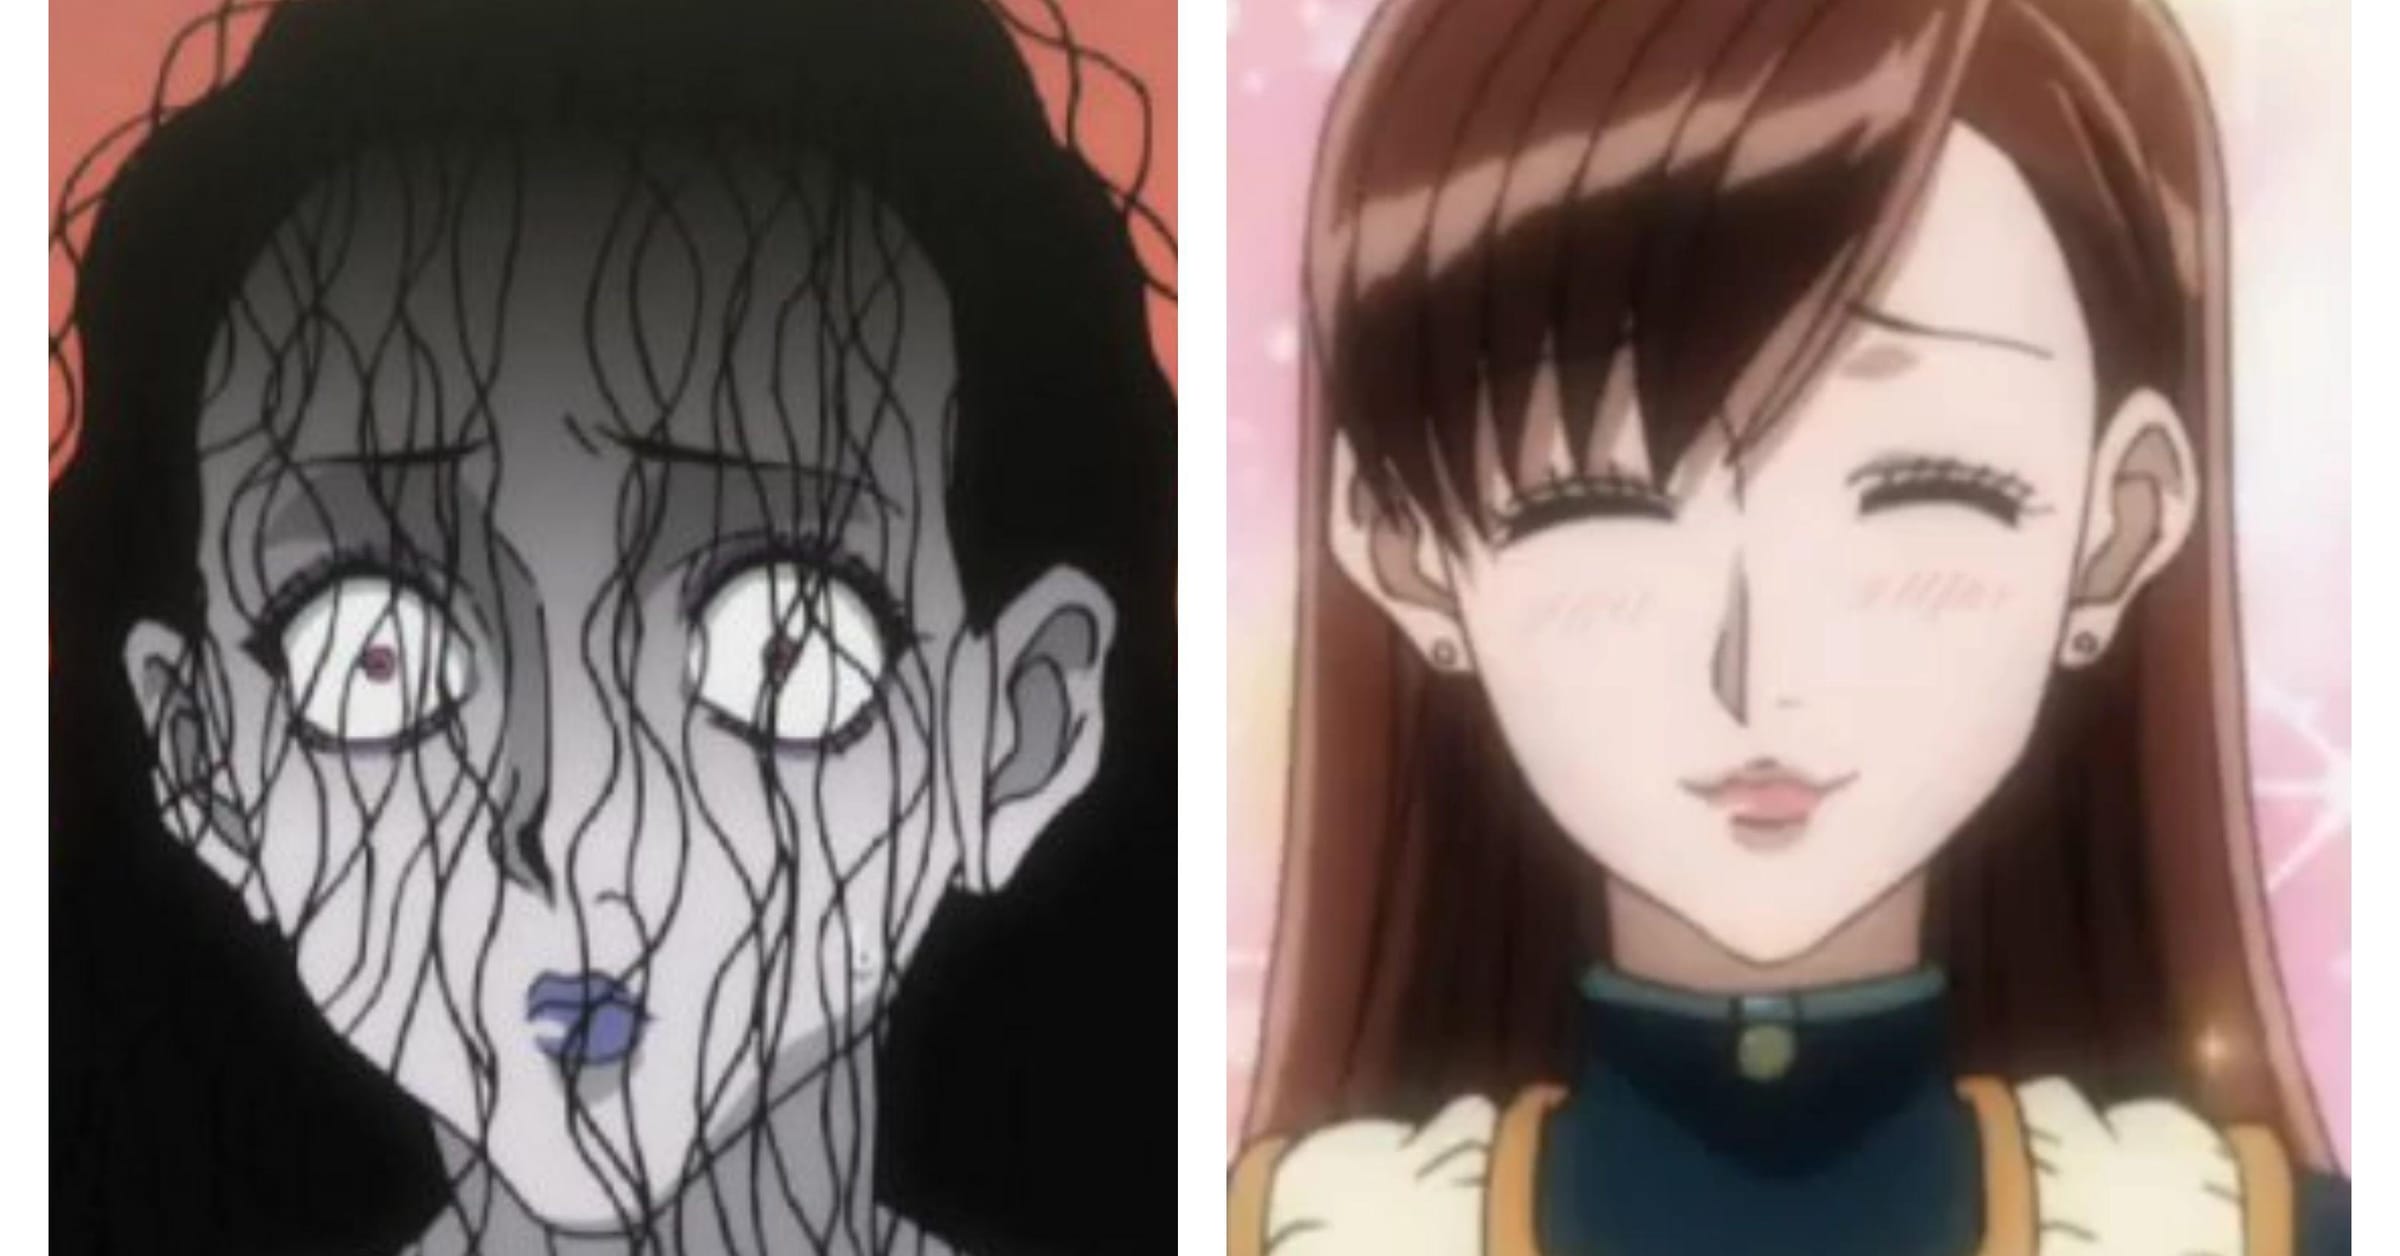 meme - Close Up Anime Girl Faces